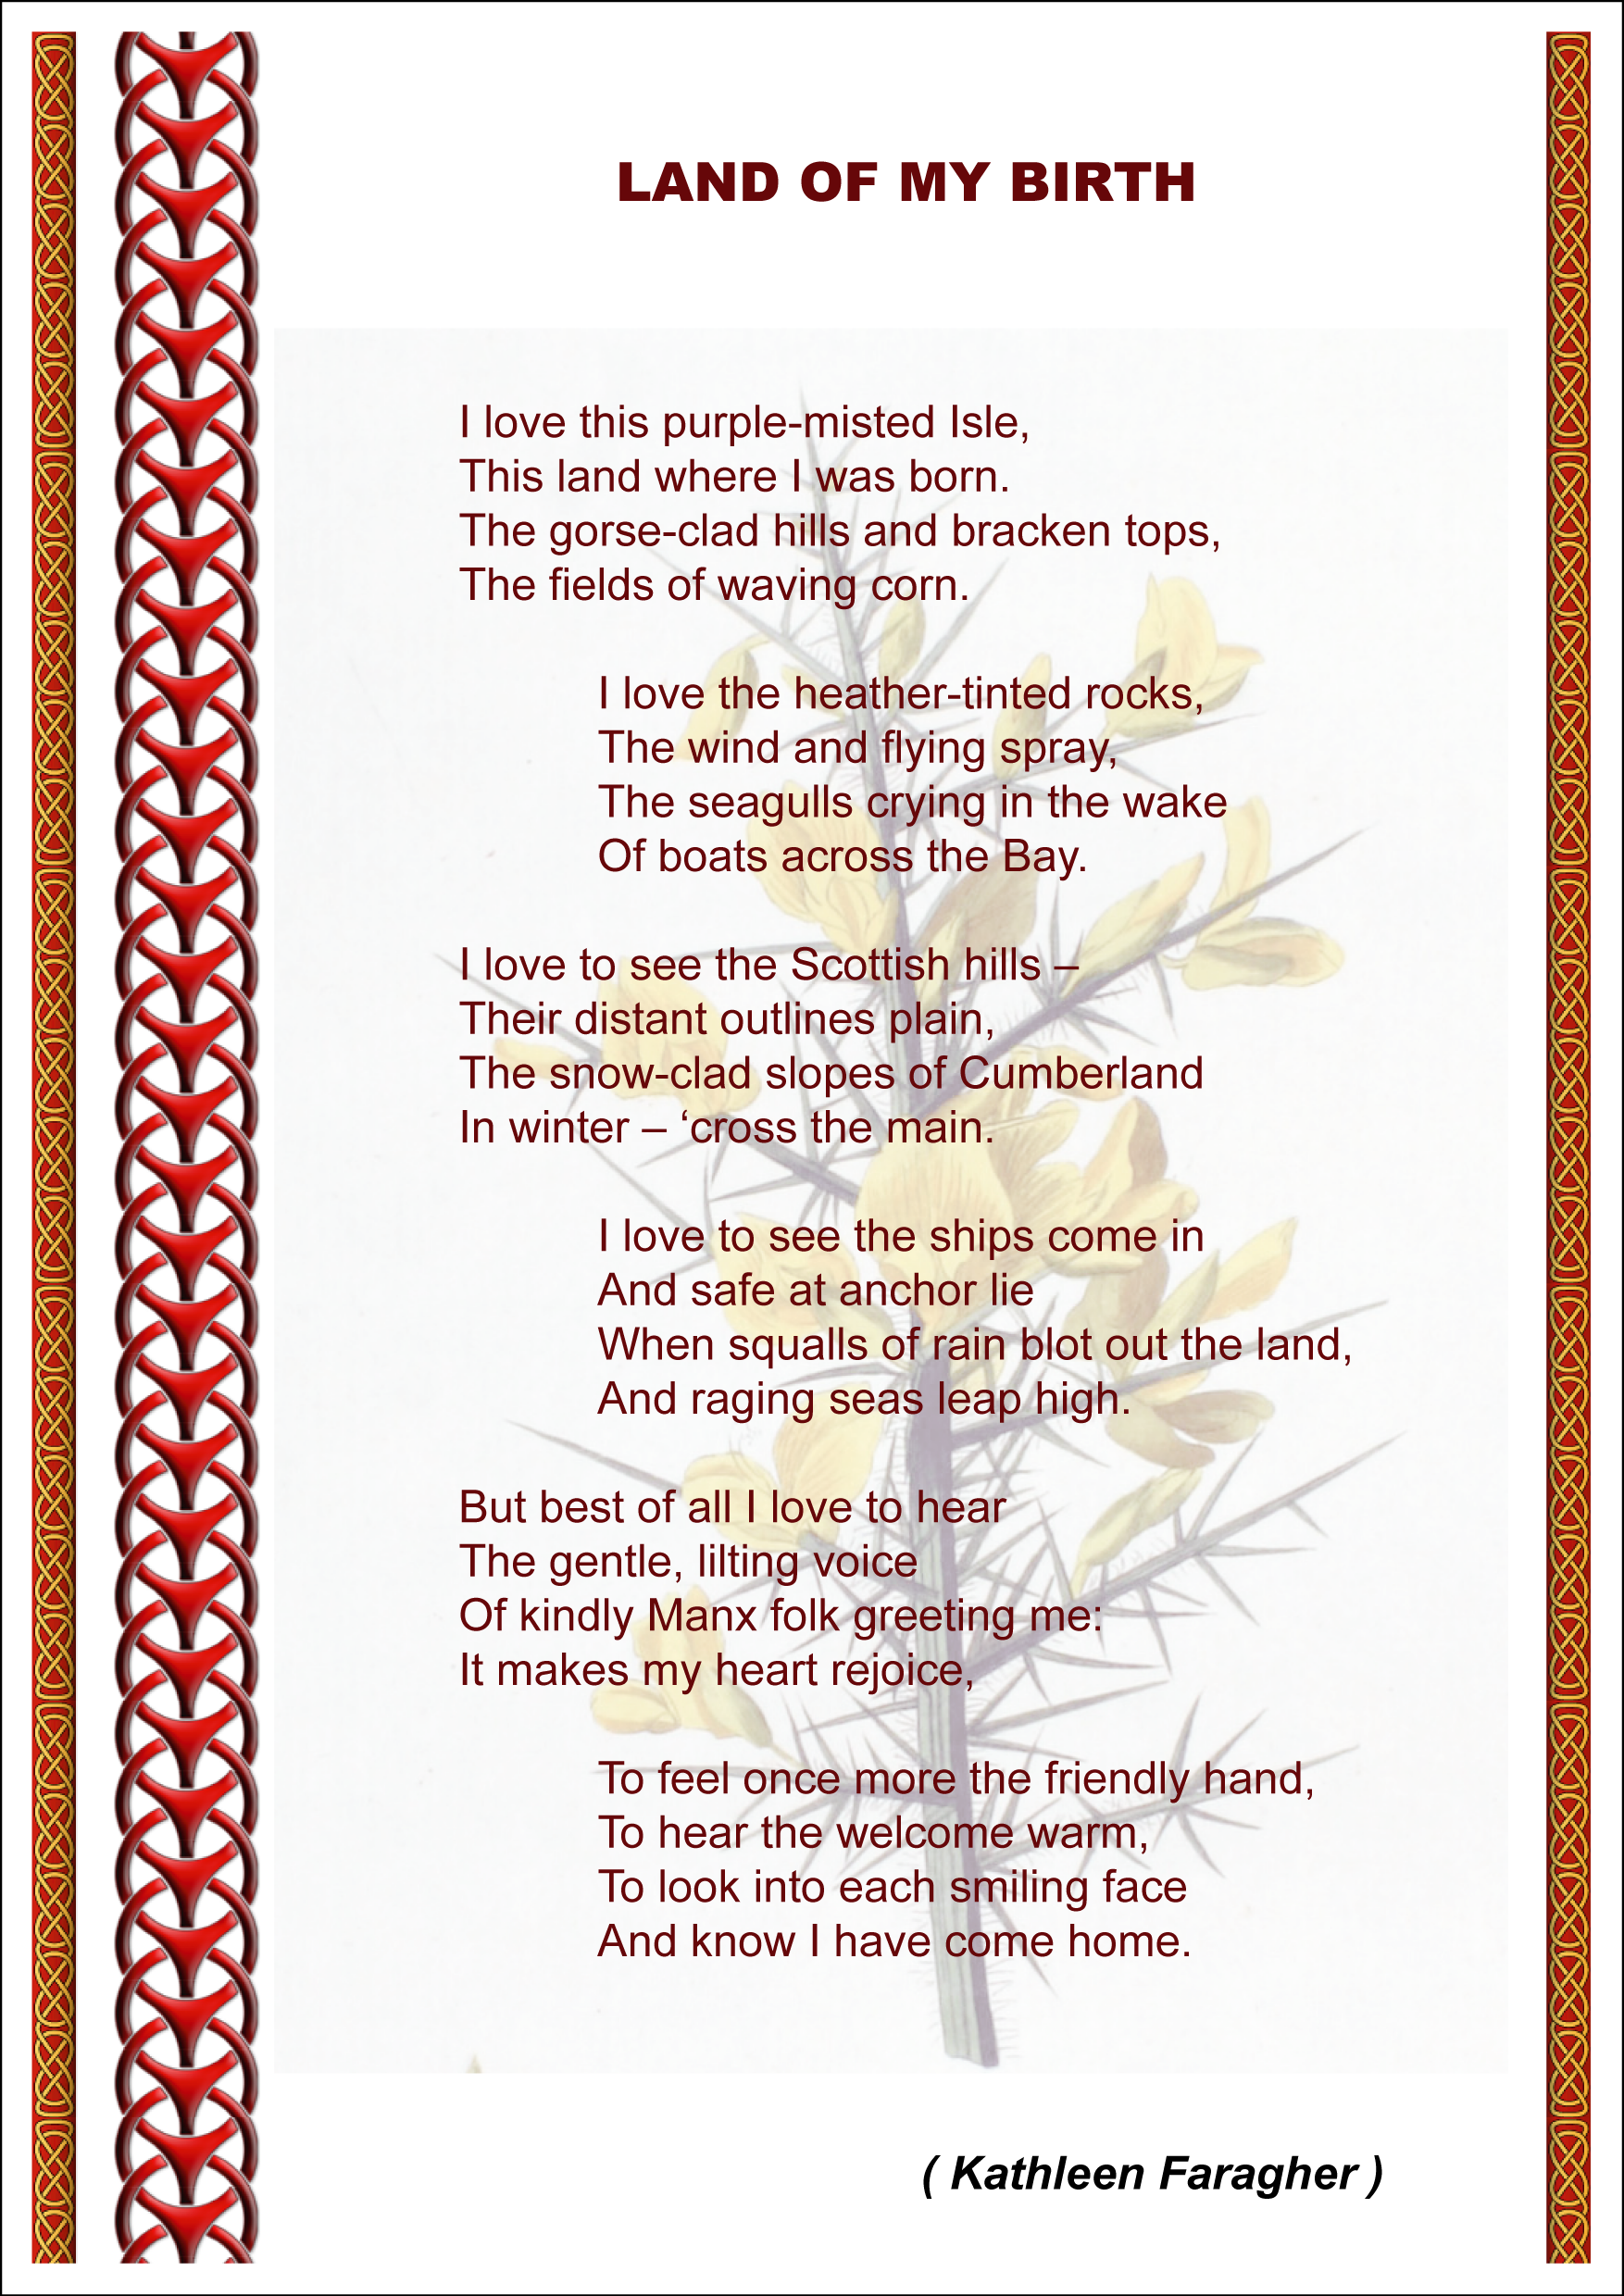 my country dorothea mackellar poem